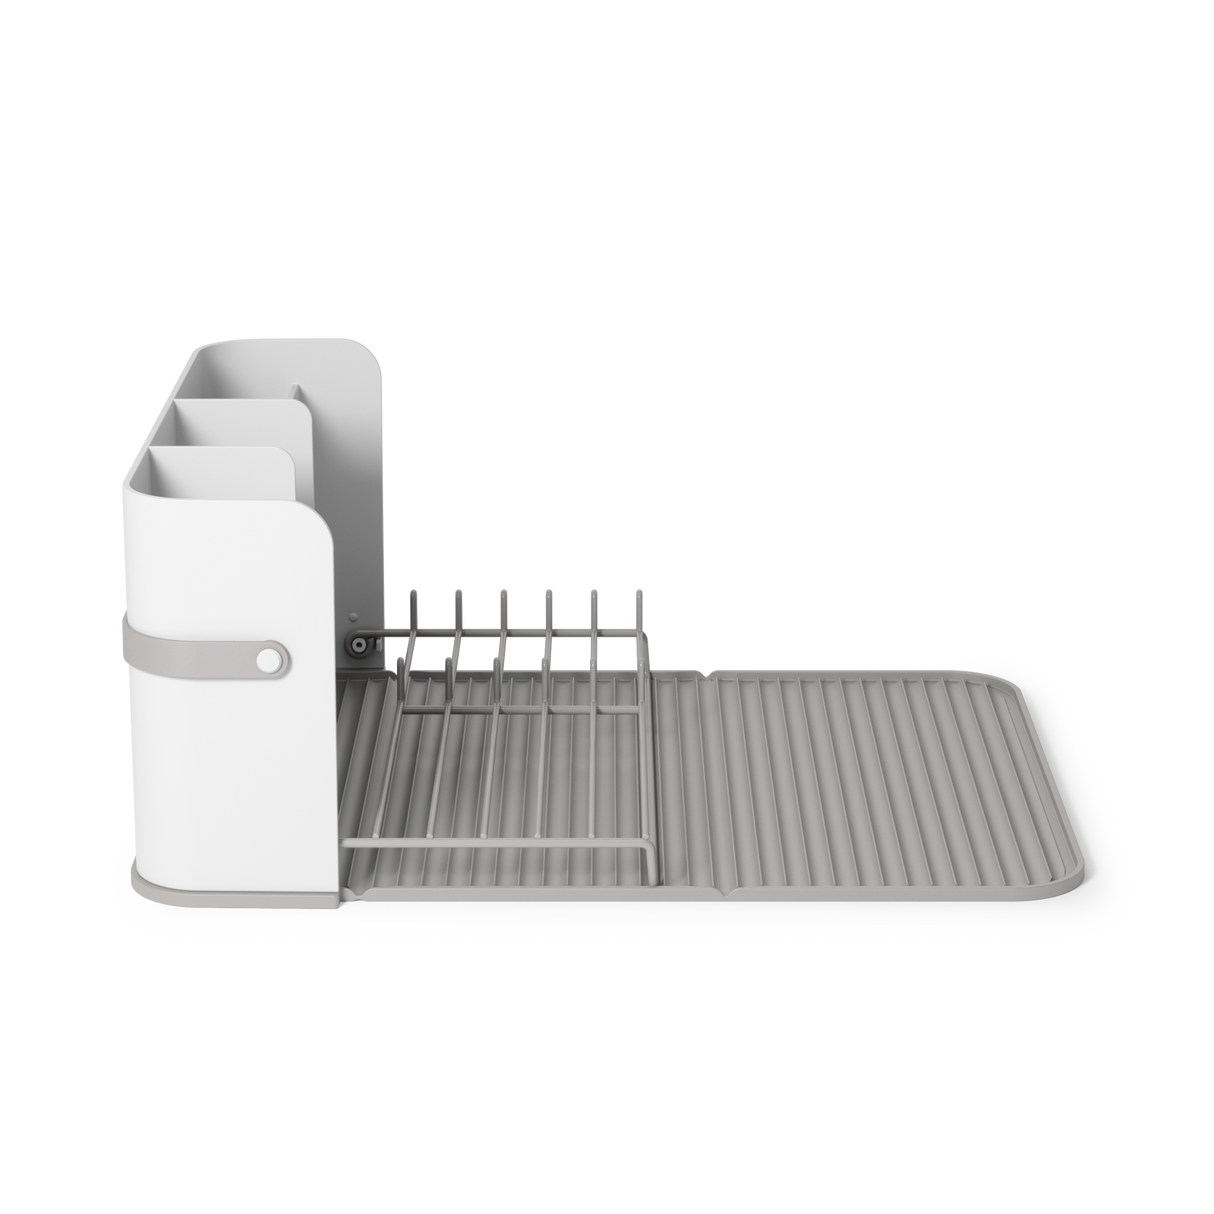 Sling Dishrack - Portable Dish Drying Rack and Mat